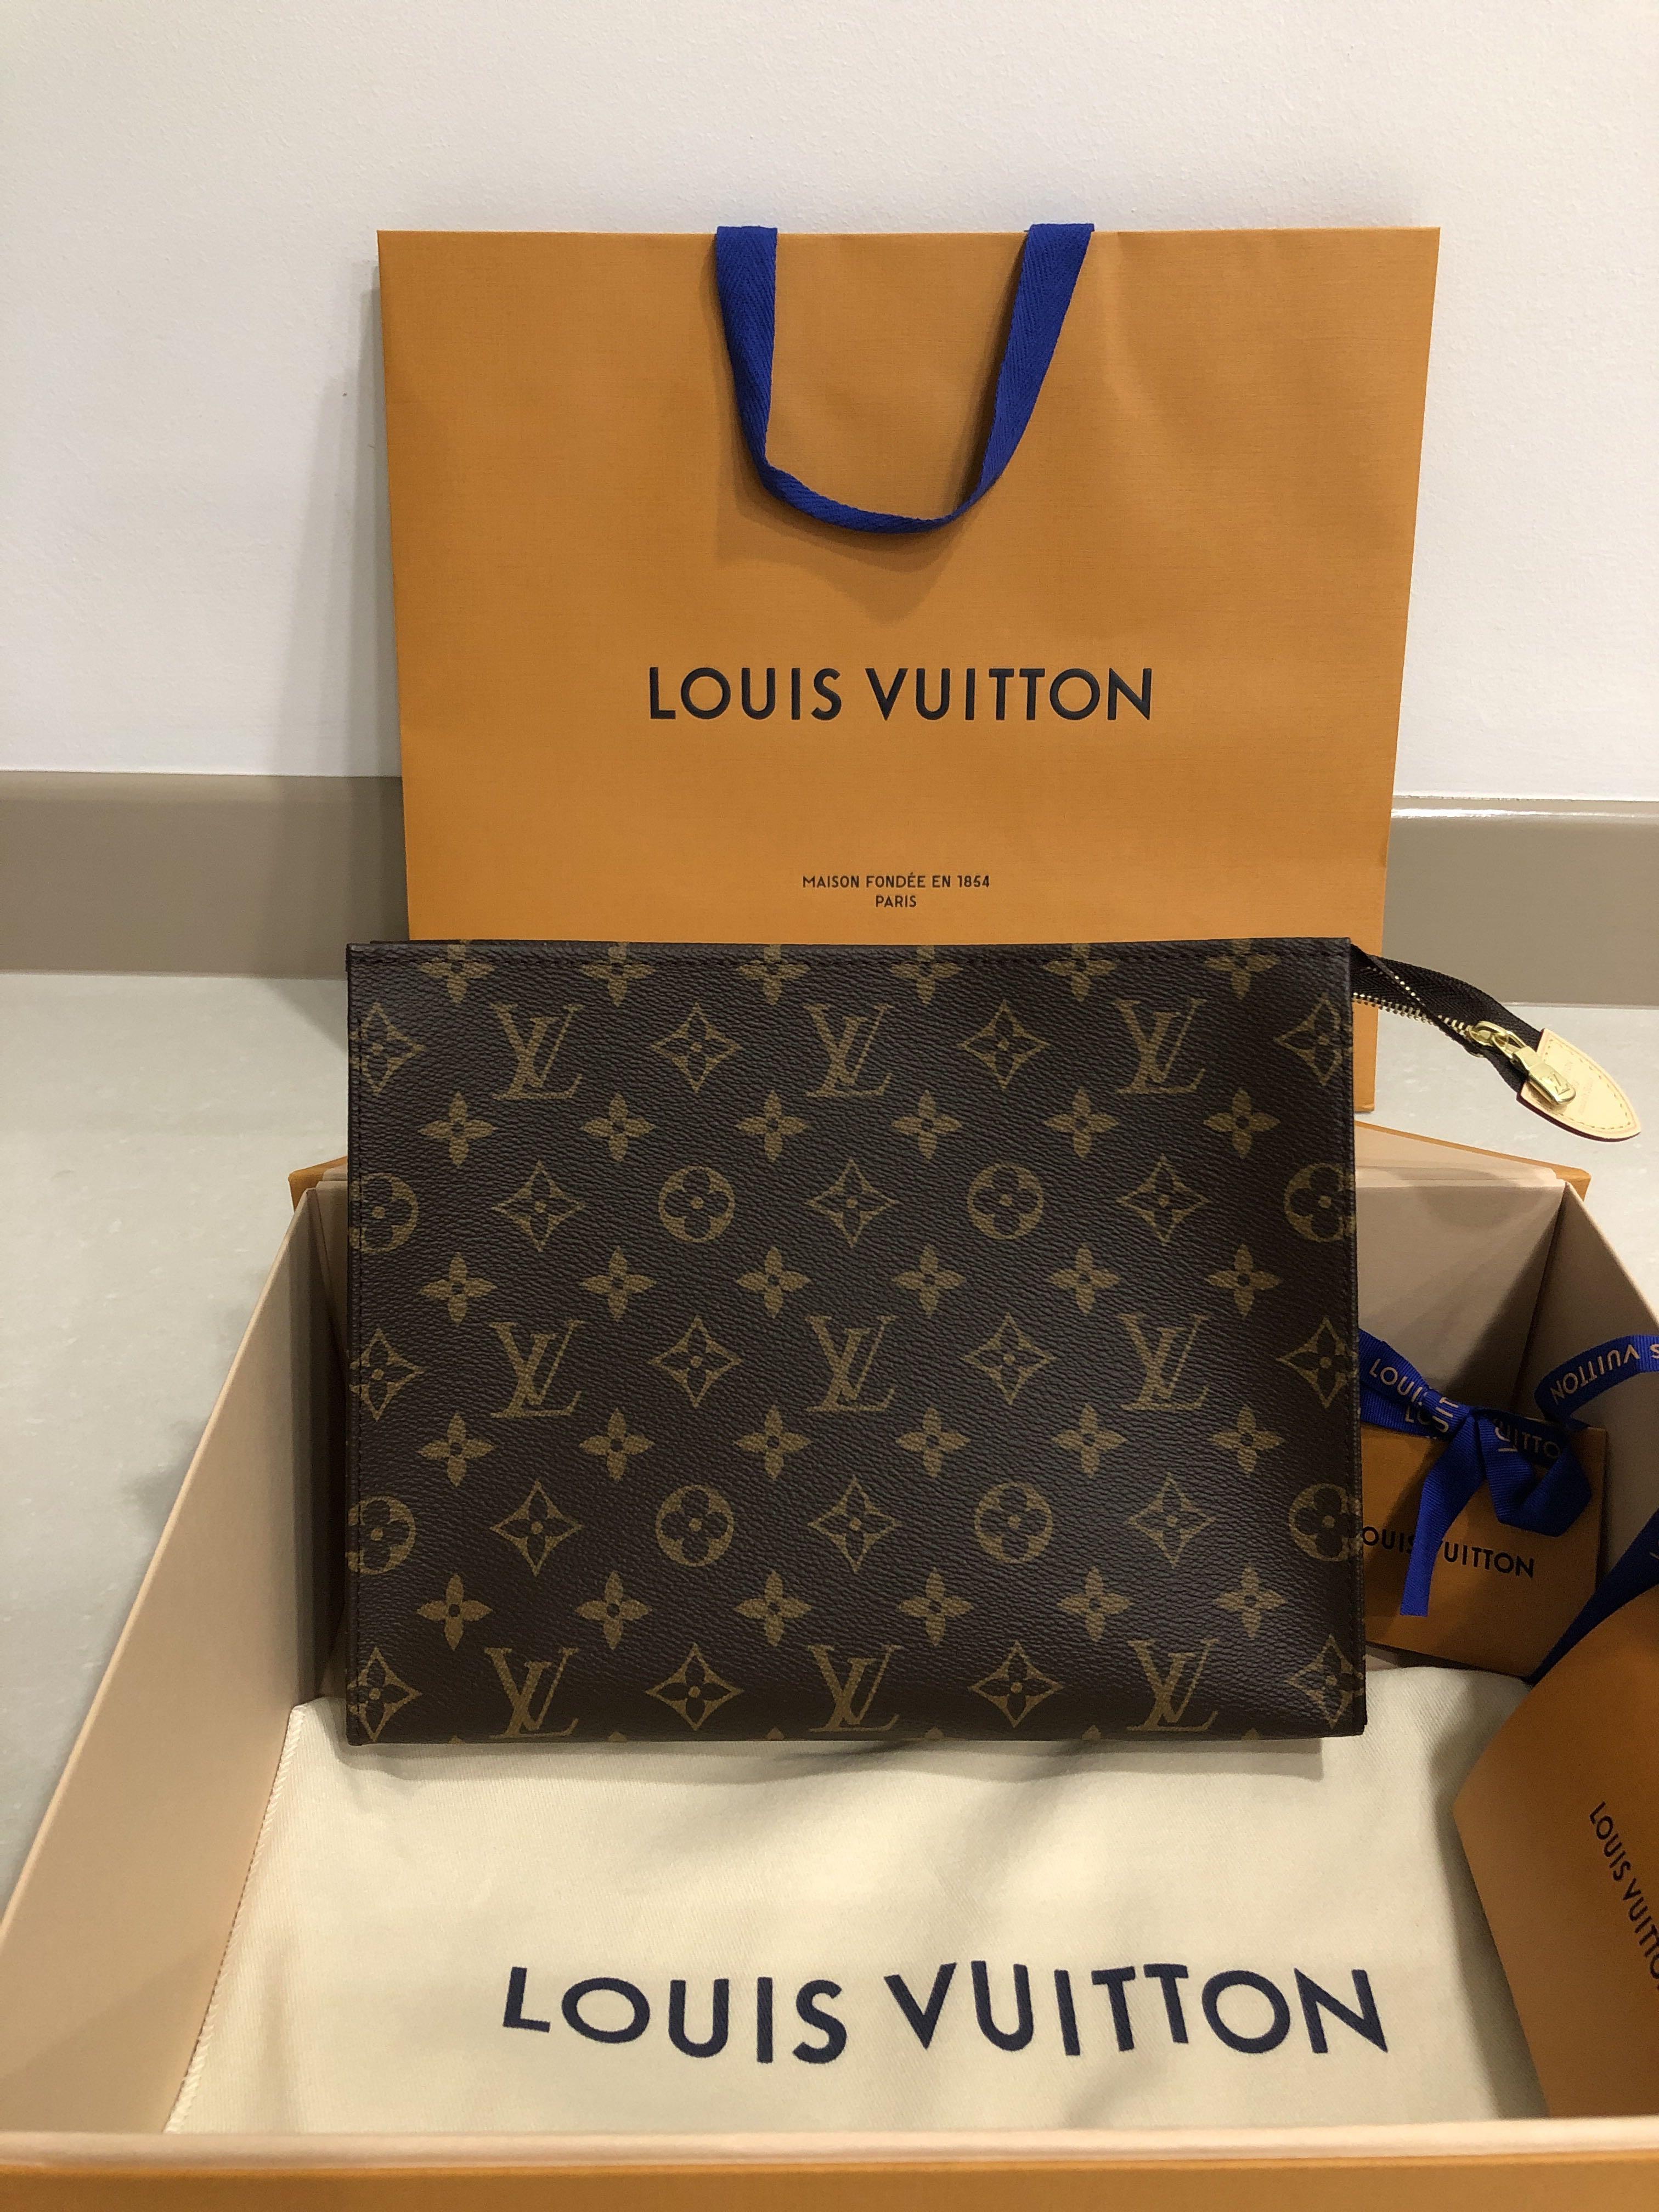 Chanel - Louis Vuitton, Sale n°2308, Lot n°426